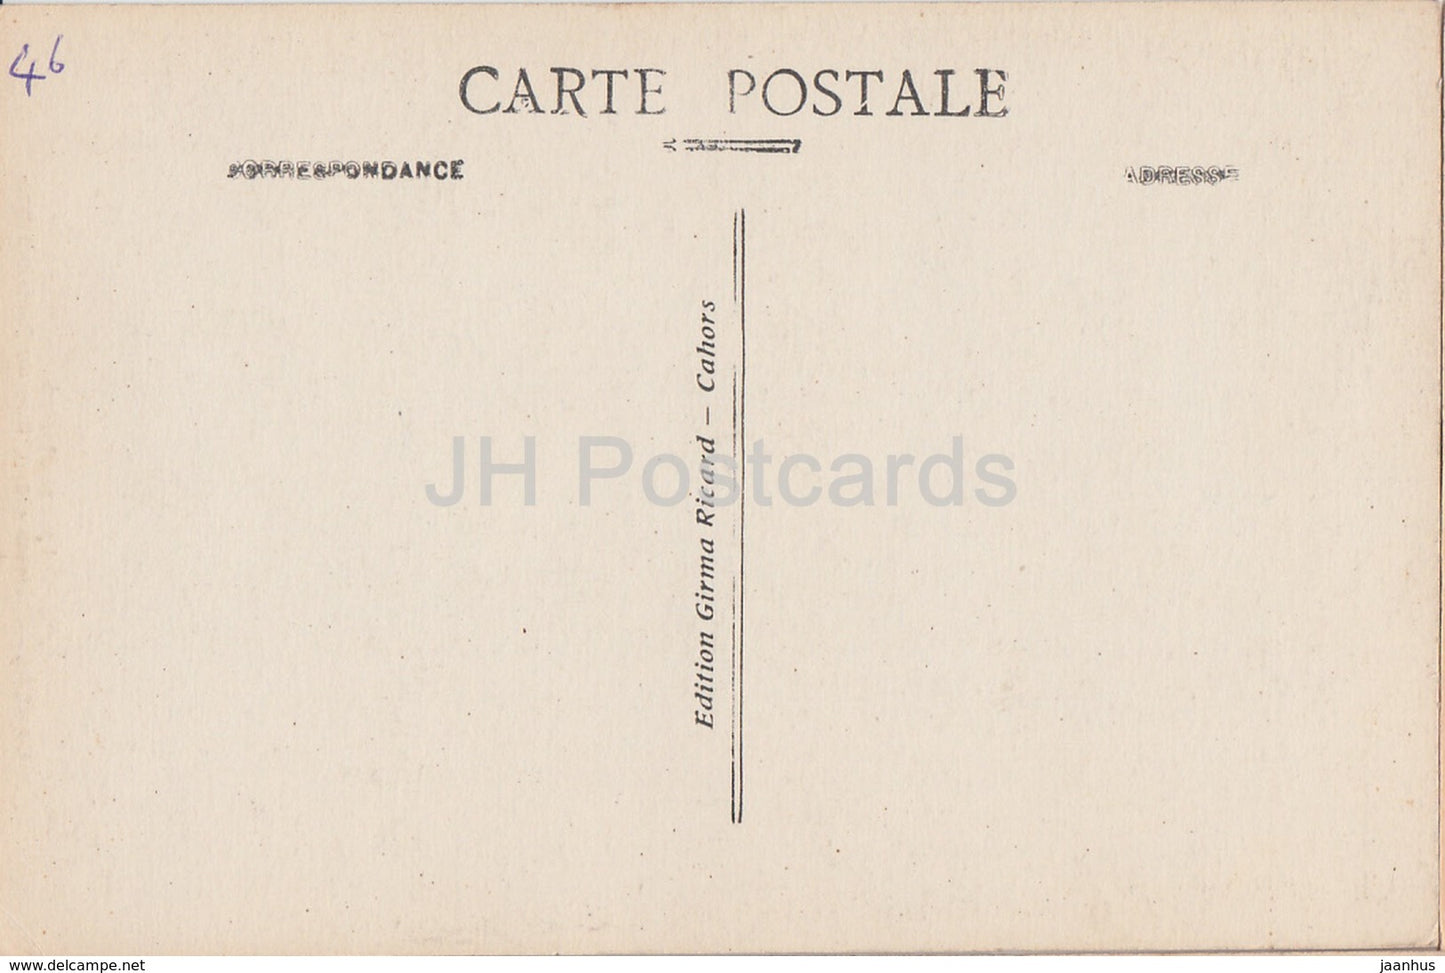 Cahors - Chateau Alban - Rue du Portail Alban - Schloss - alte Postkarte - Frankreich - unbenutzt